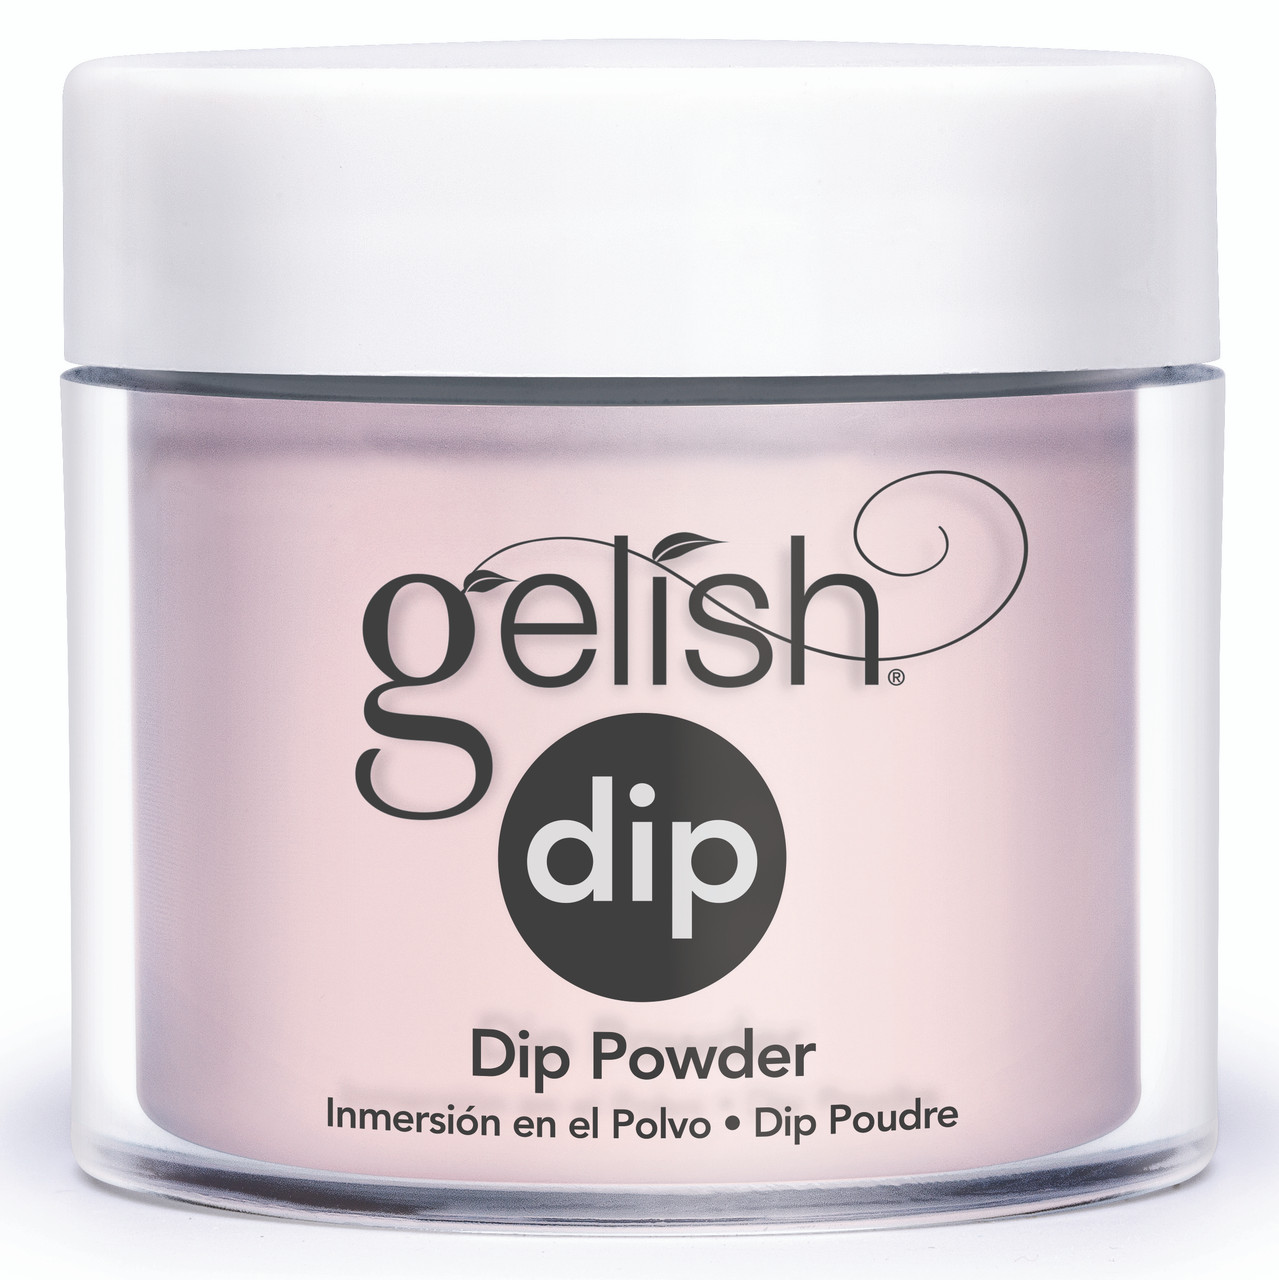 Gelish Dip Powder All About The Pout - 0.8 oz / 23 g